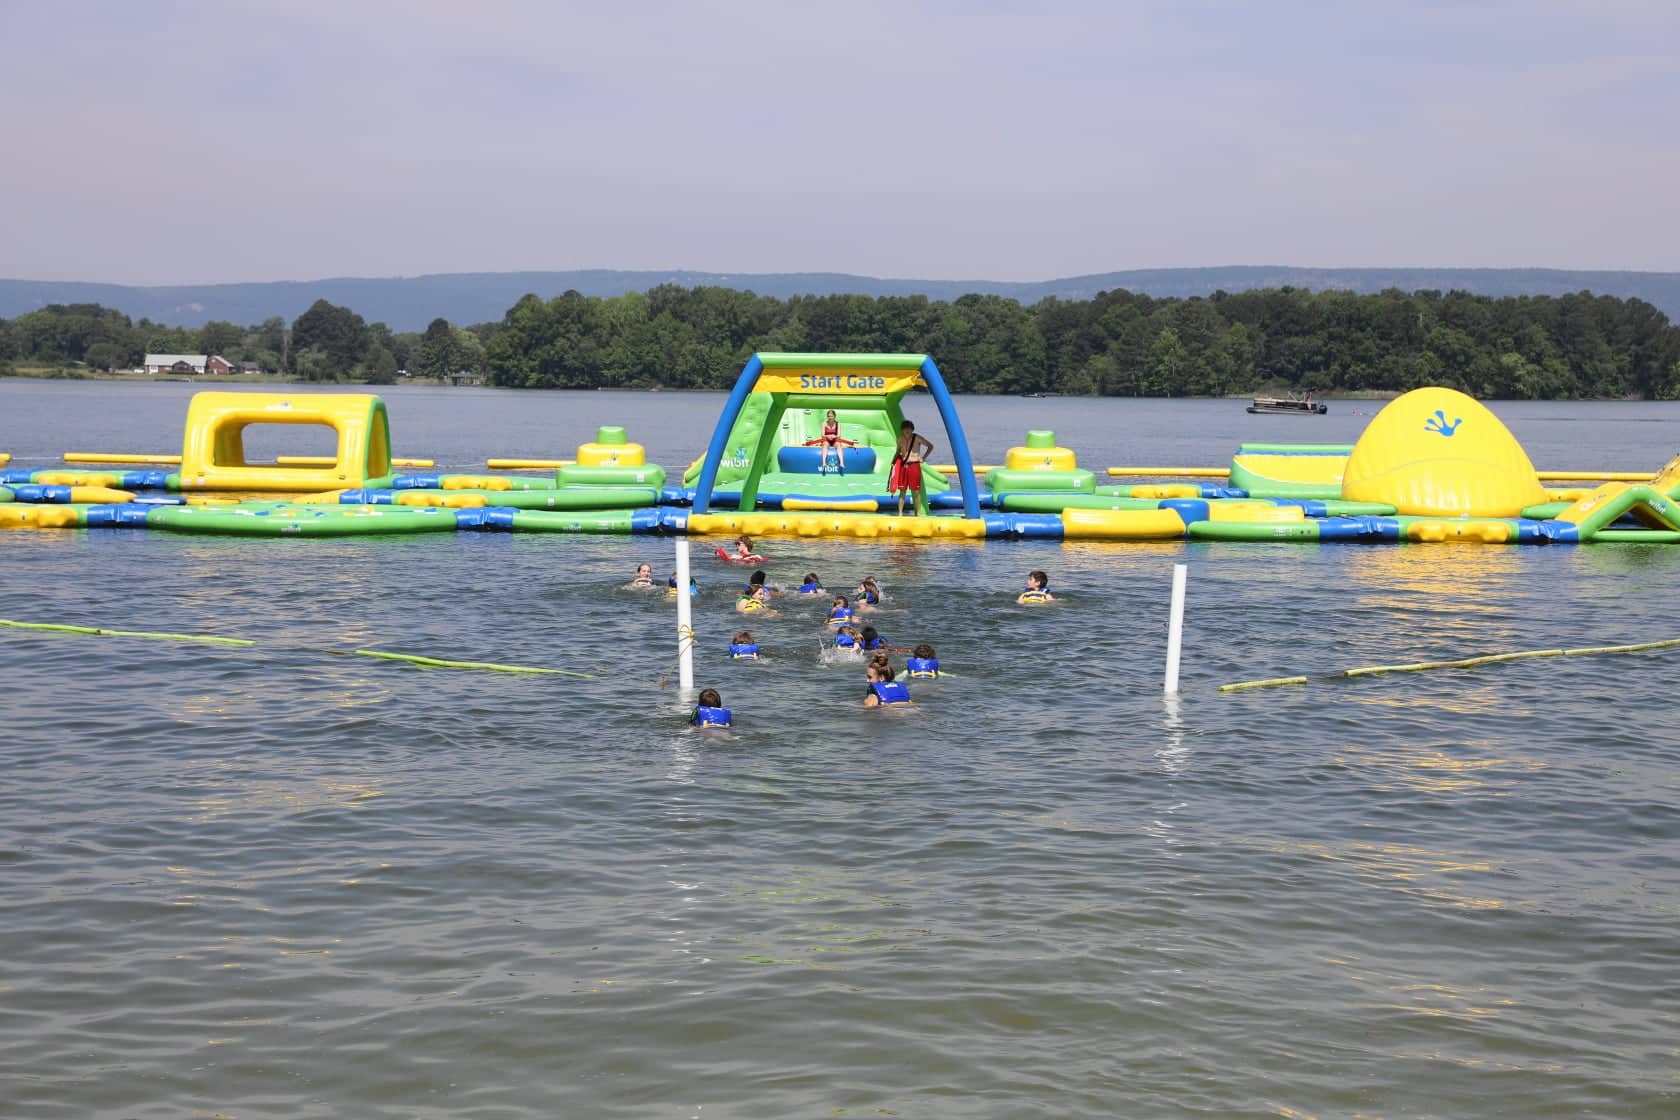 NOOGA Splash  Inflatable Aqua Park at Chester Frost Park